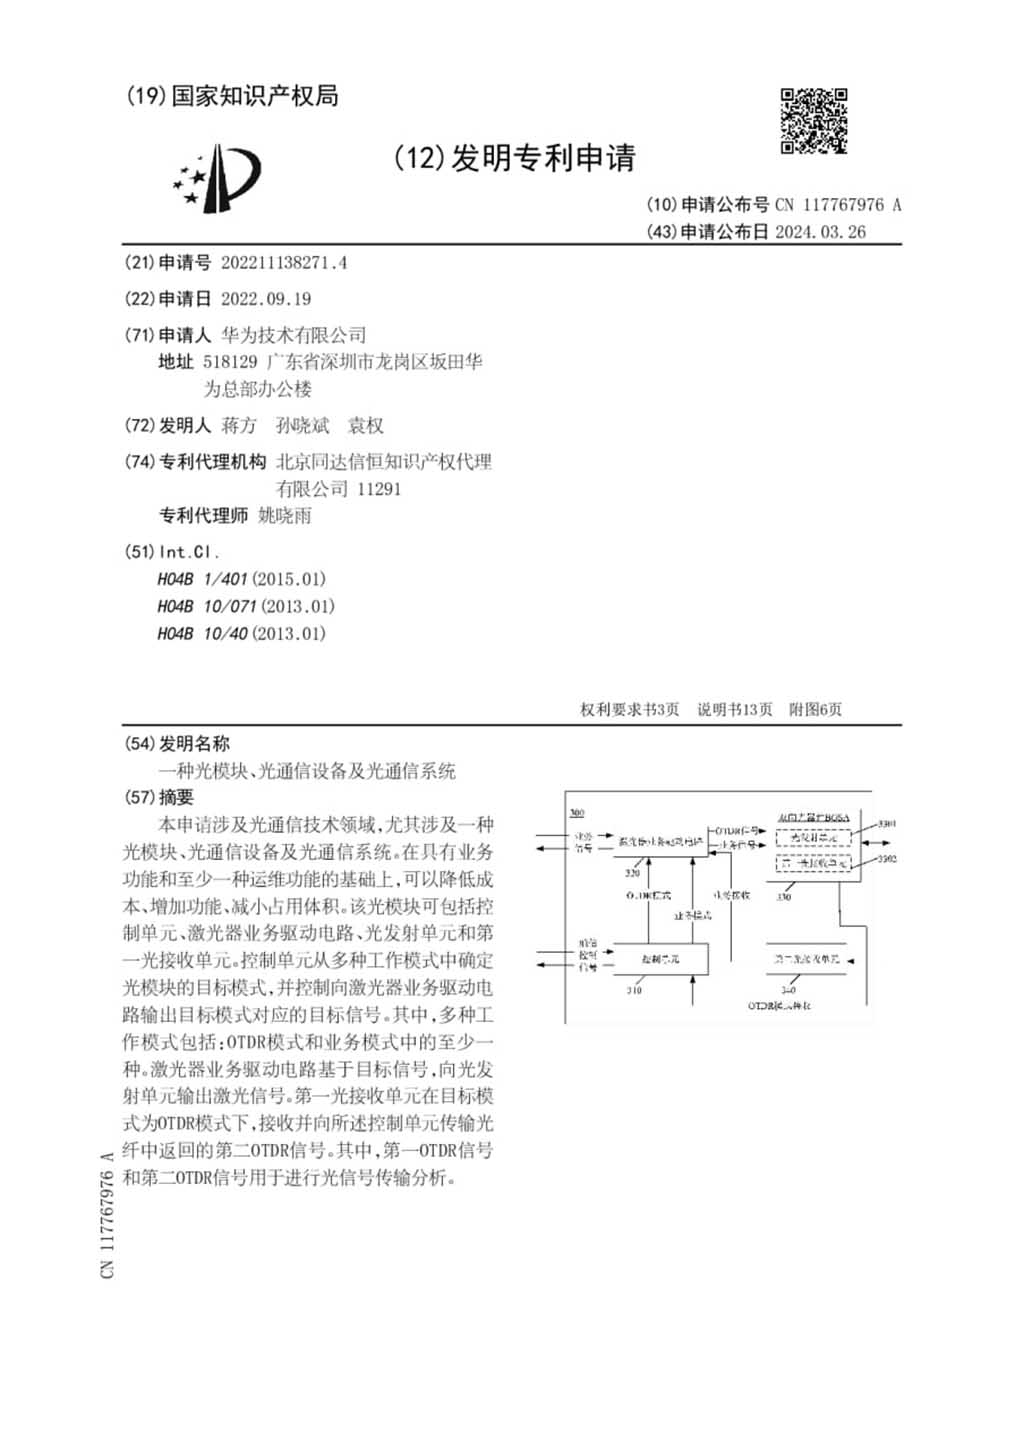 Huawei optical module patent